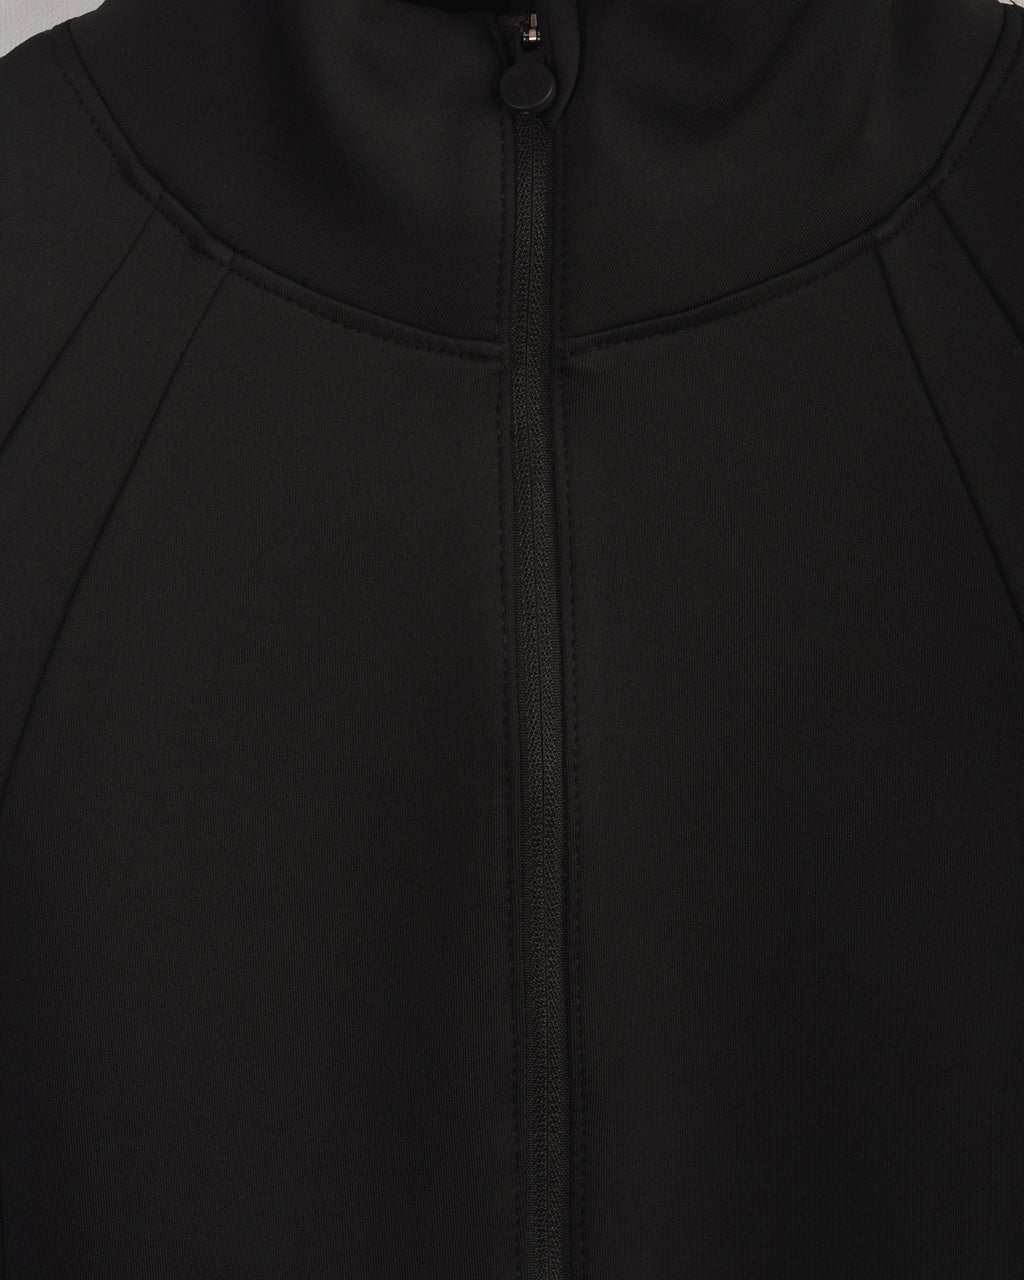 APANA Full Zip Compression Yoga Jacket Black